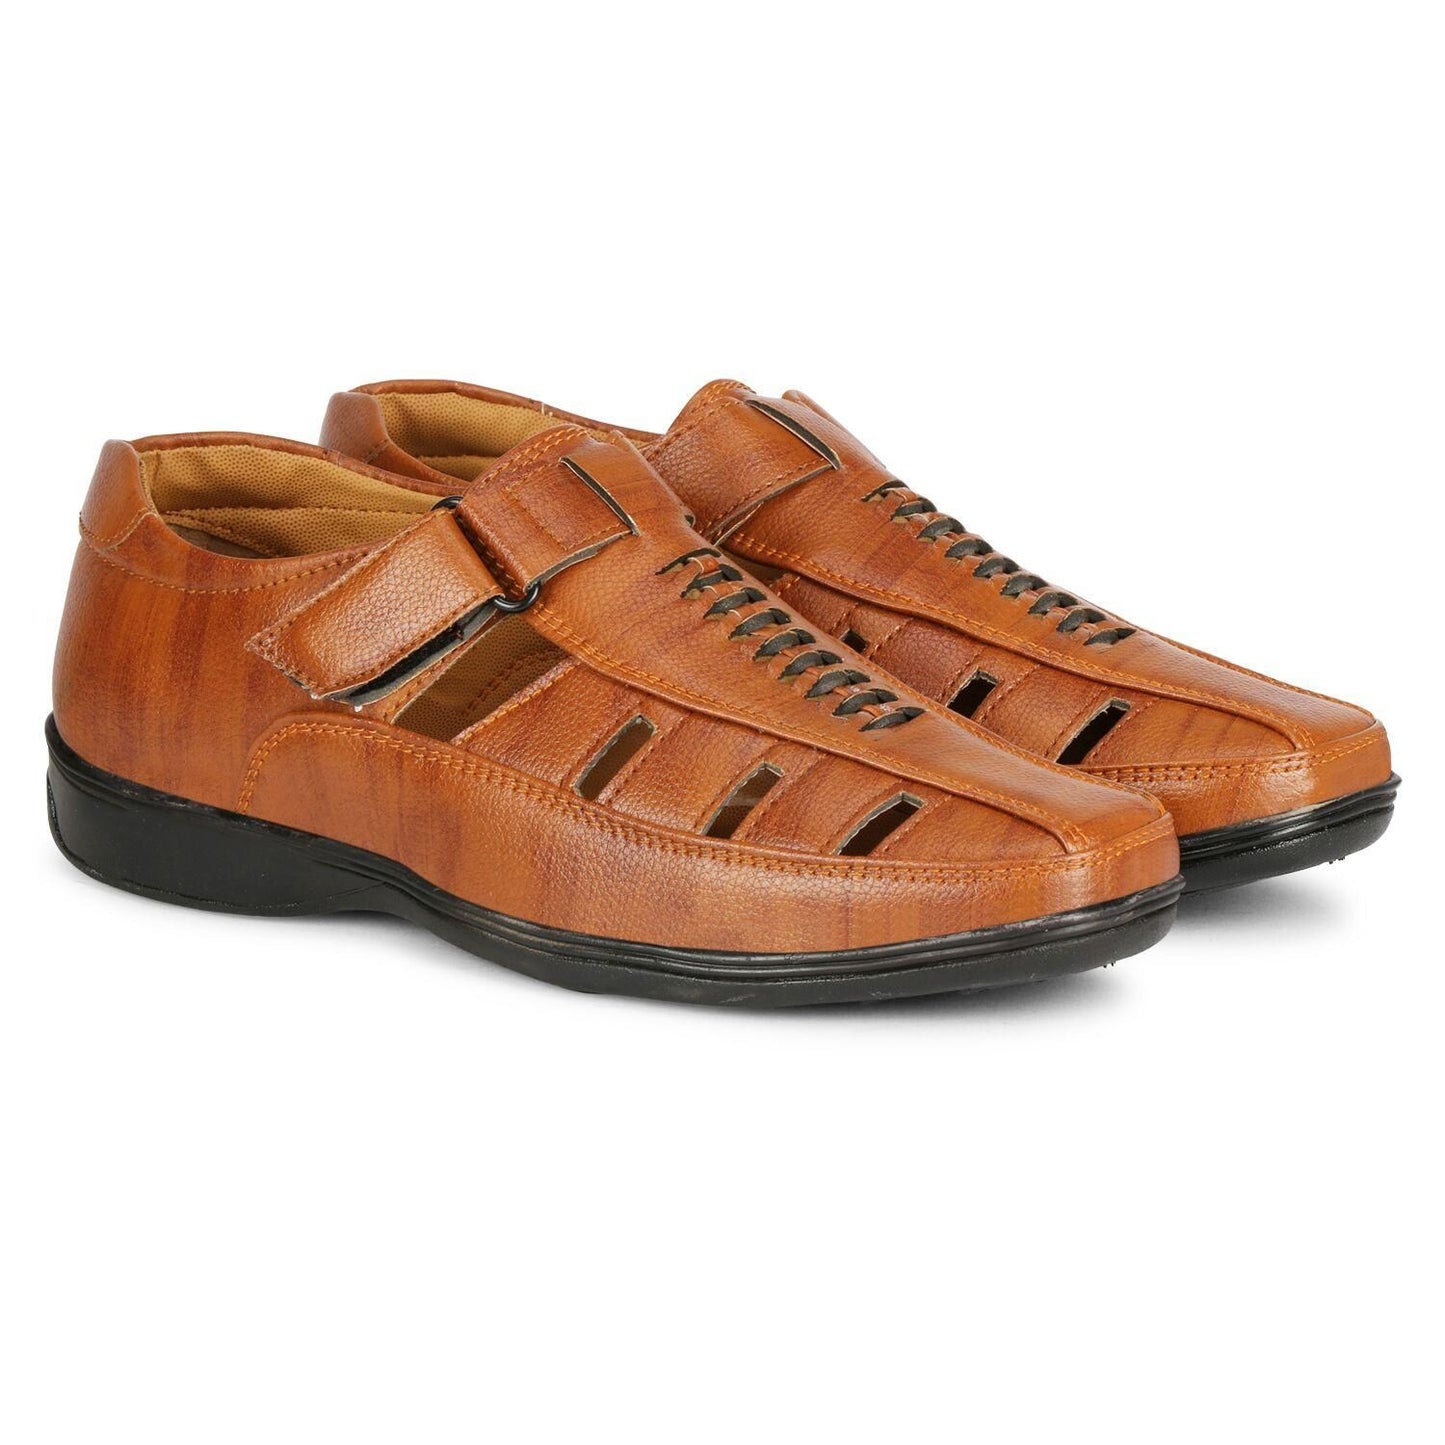 Men's Casual Sandal